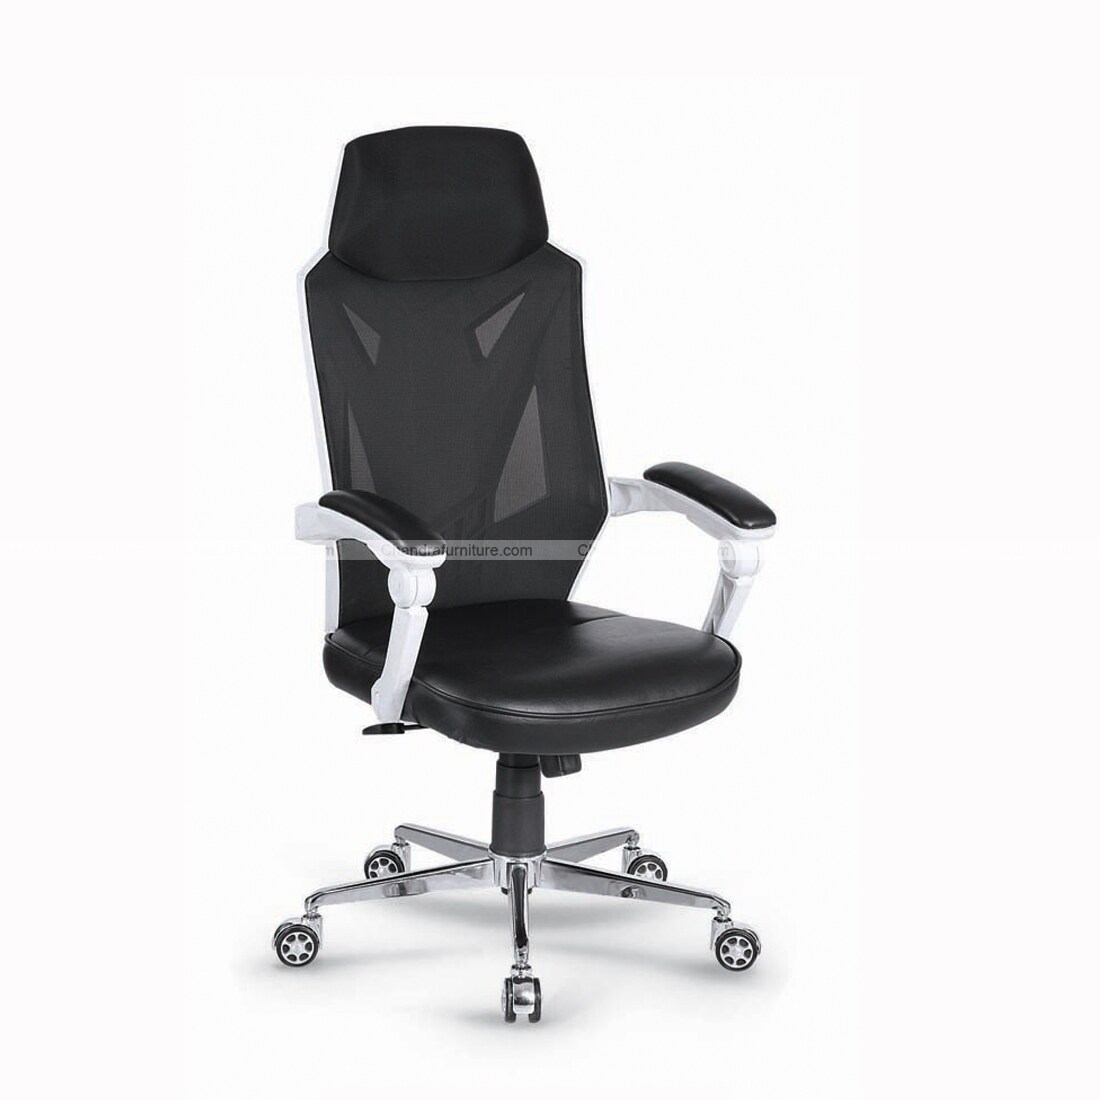  Chandra Furniture  Ezc 282N Office Chair Workstation 